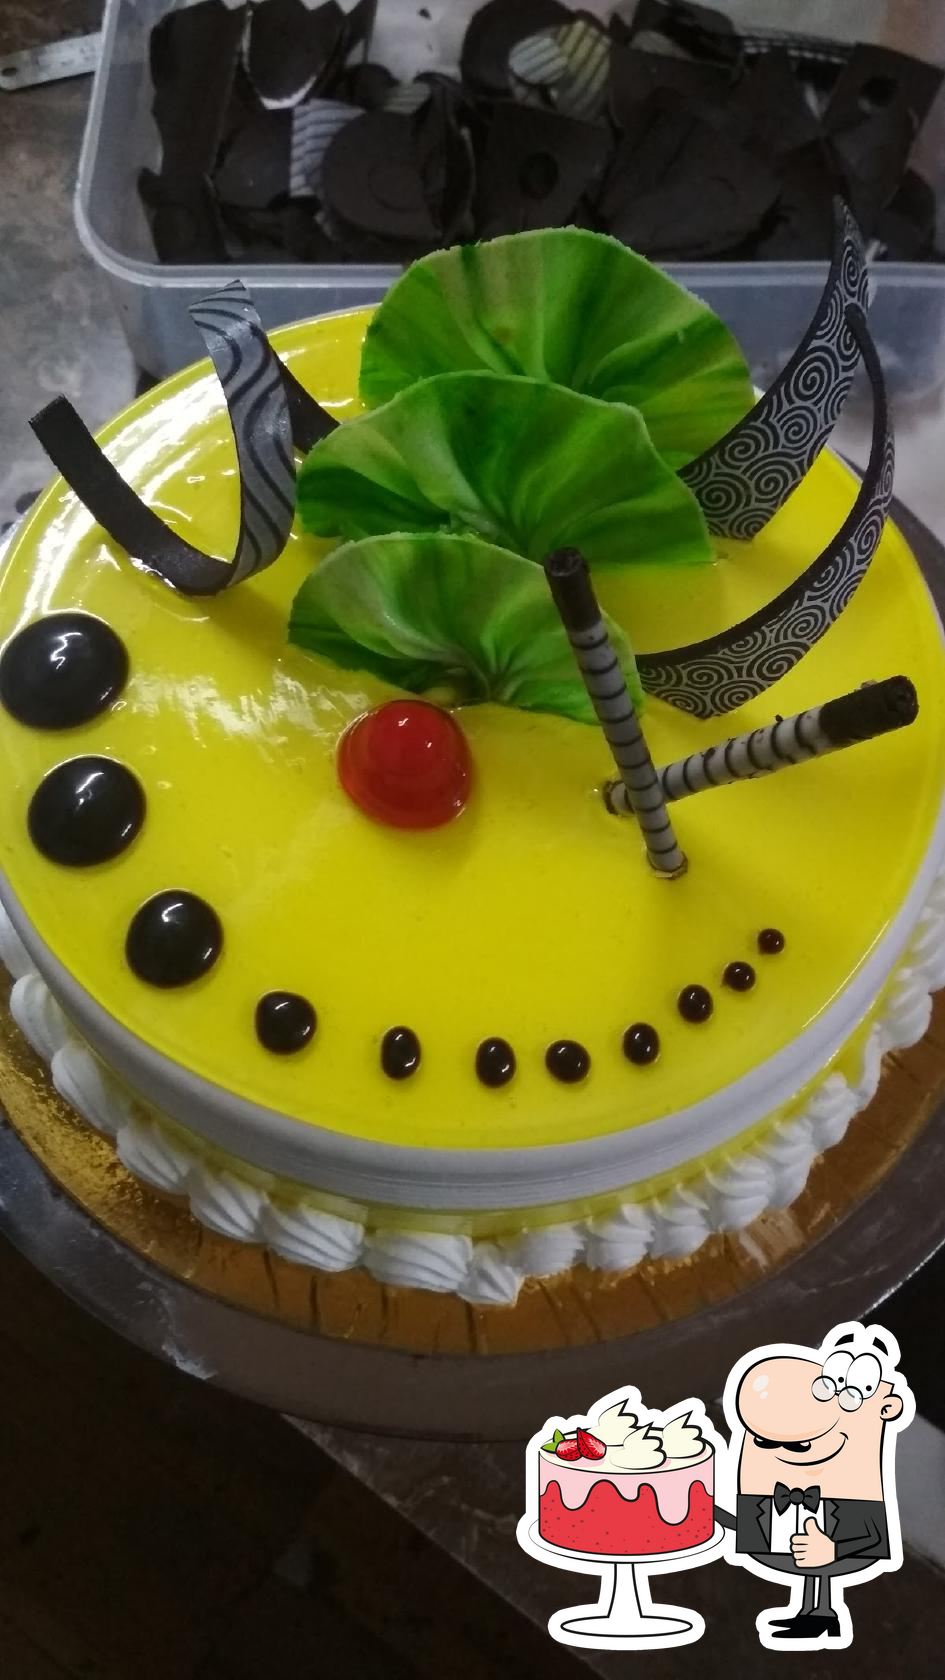 7th Heaven Cake Shop Bhagalpur, Bihar - YouTube